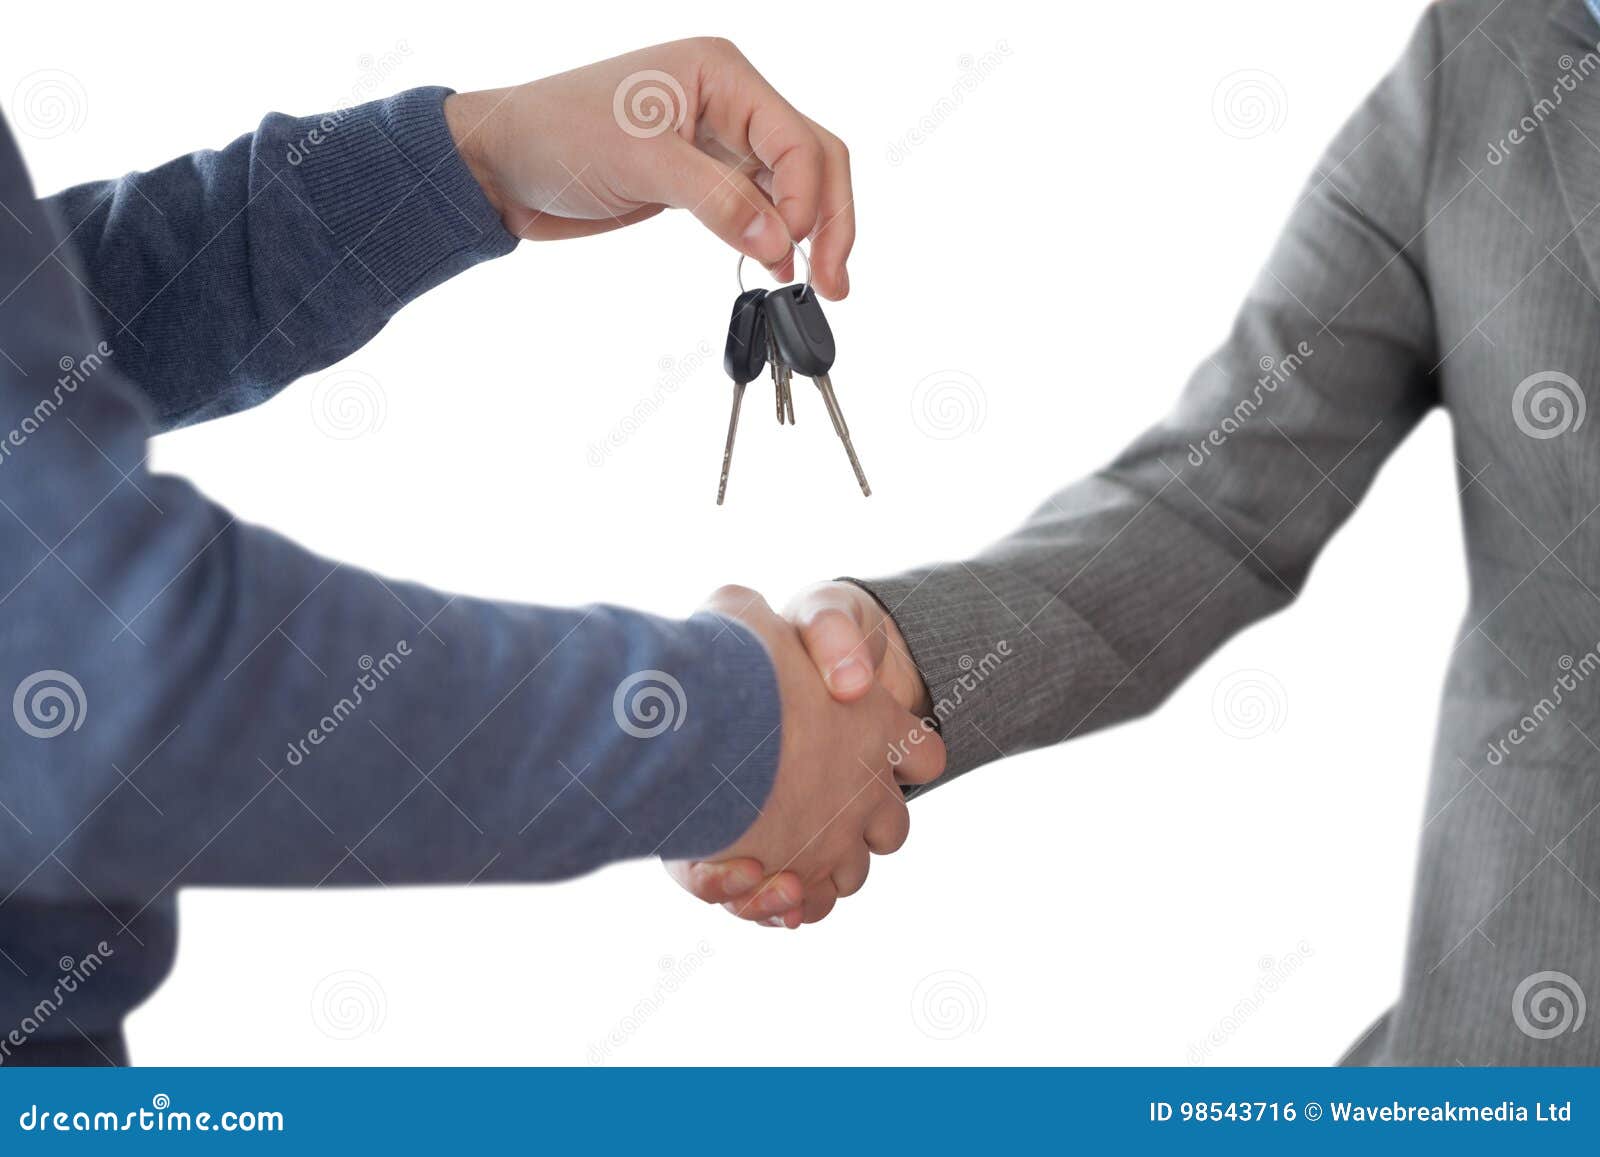 Мужчина дает ключи. Передача ключей белый фон. Человек дает ключи. Человек передает ключи другому человеку при общении. Передача ключей фото зеленое.